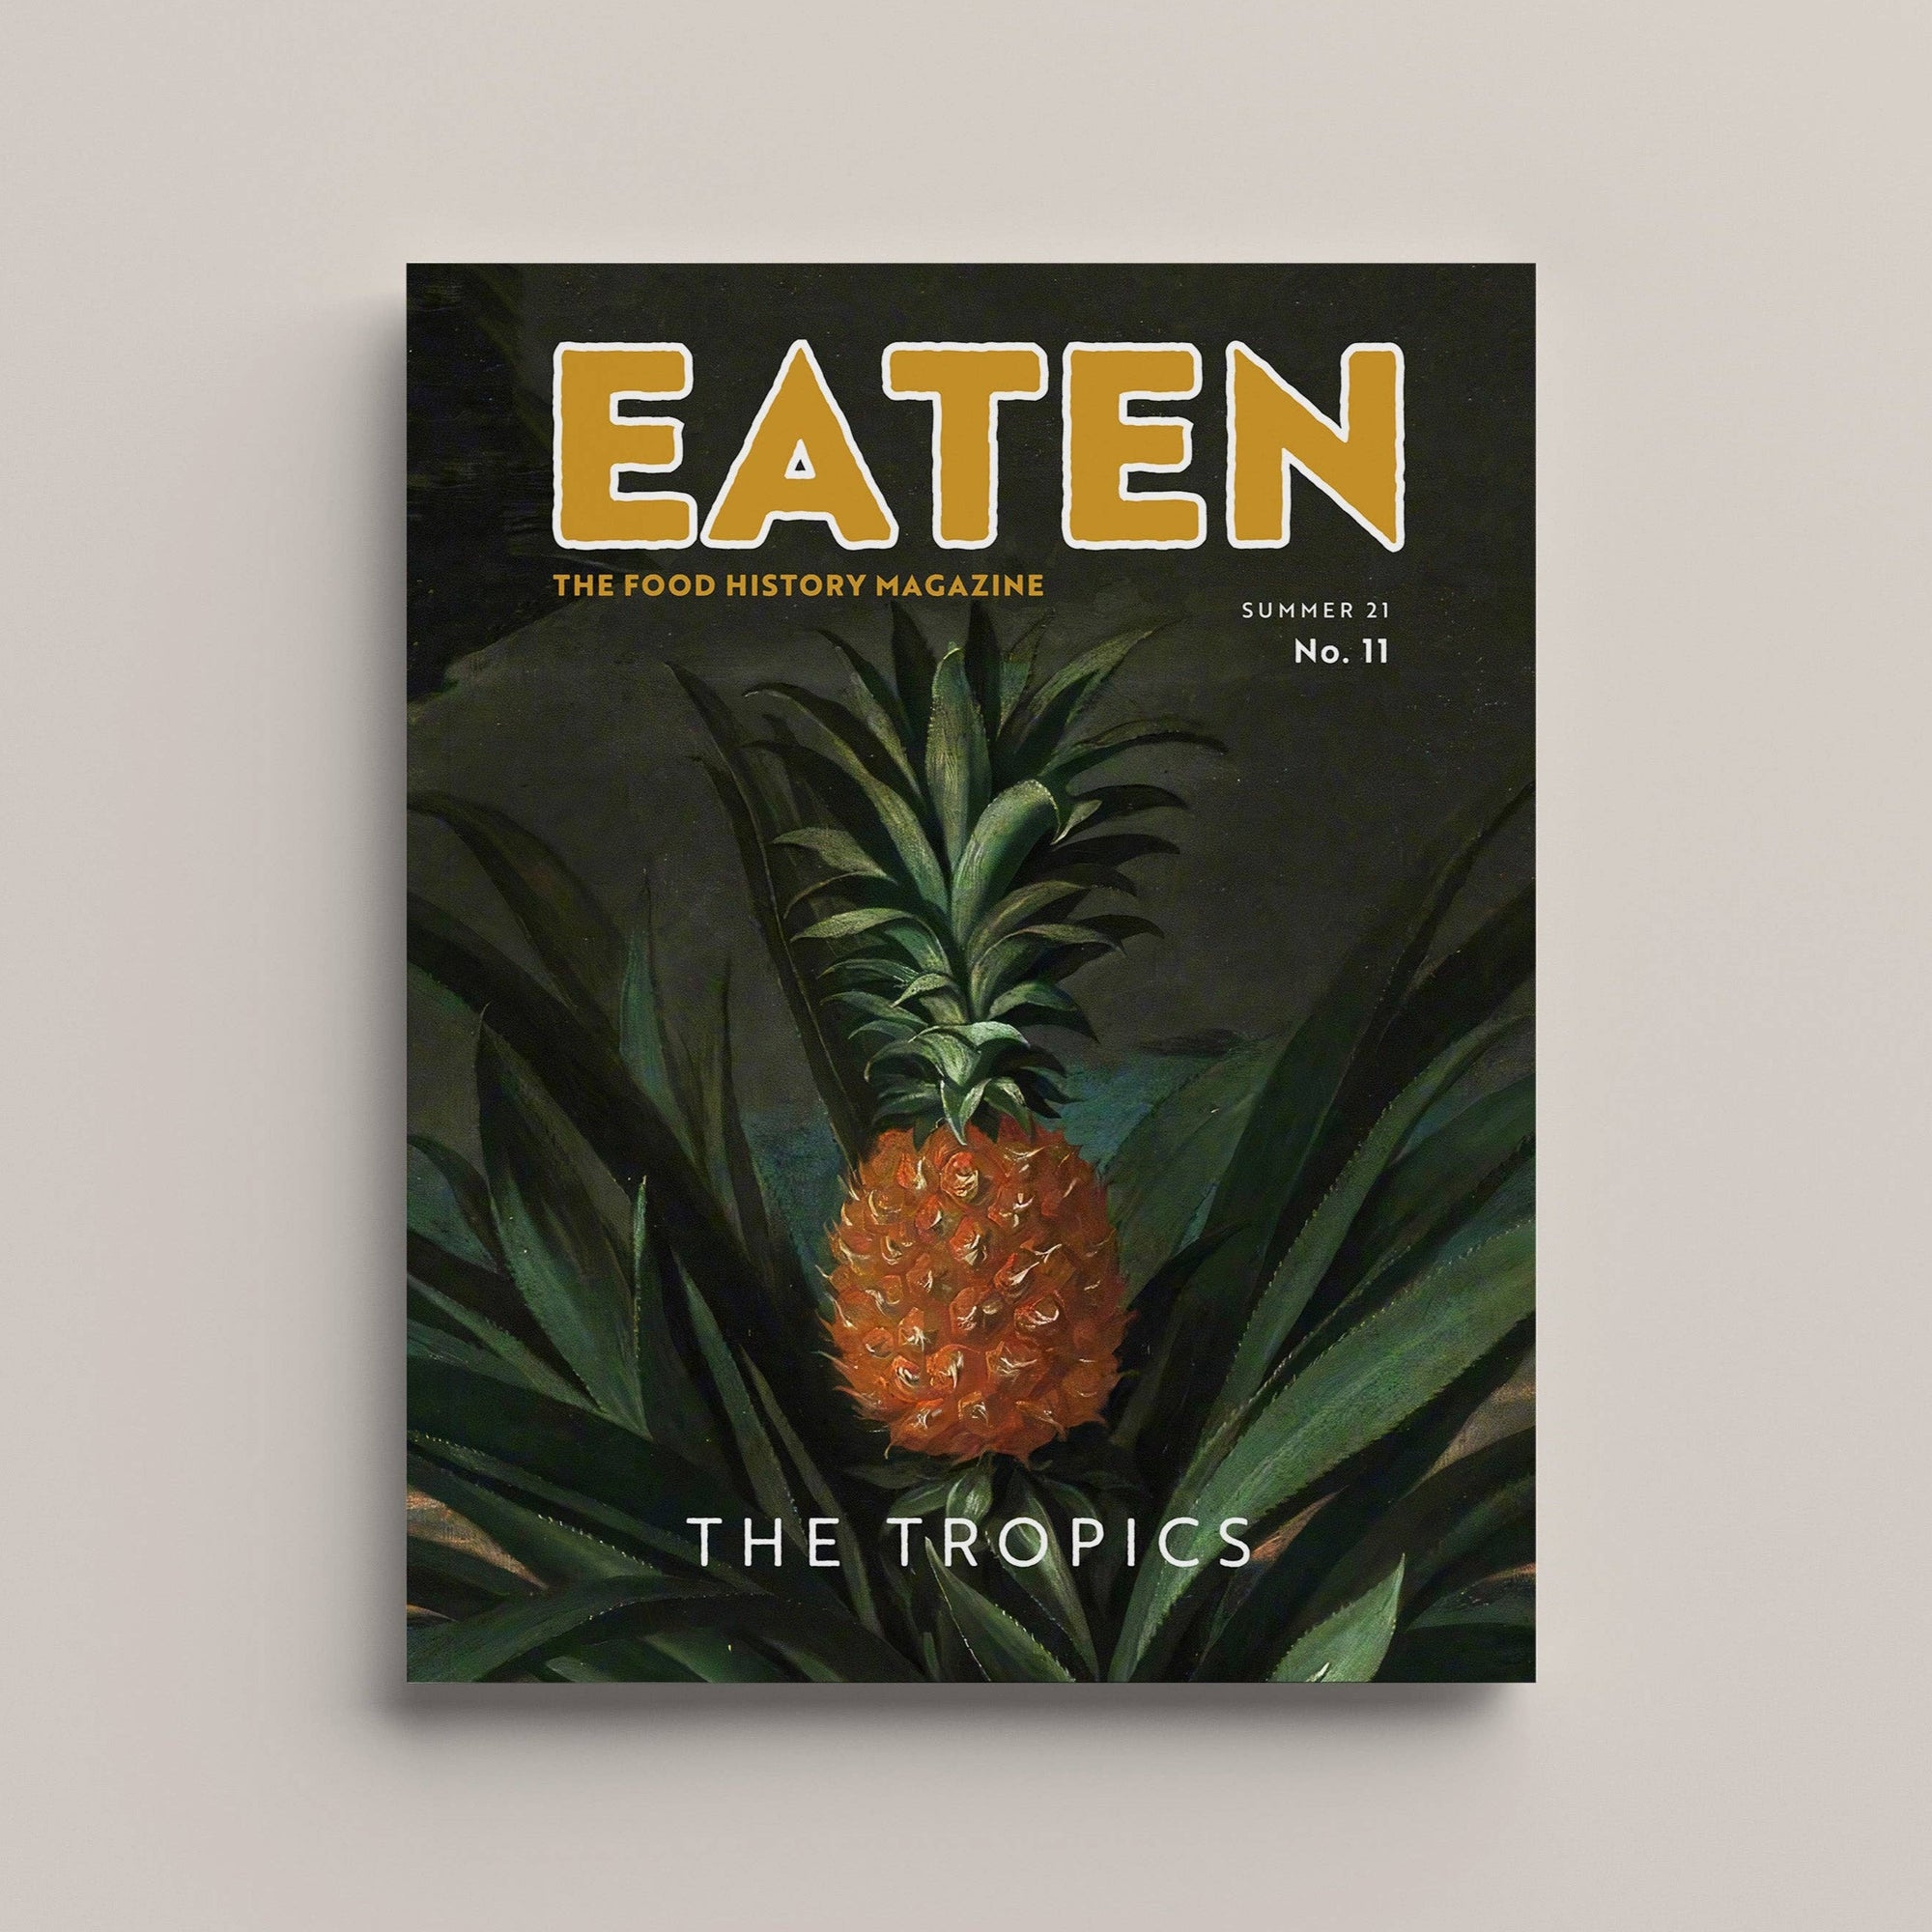 EATEN Magazine - No. 11: The Tropics - Space Camp